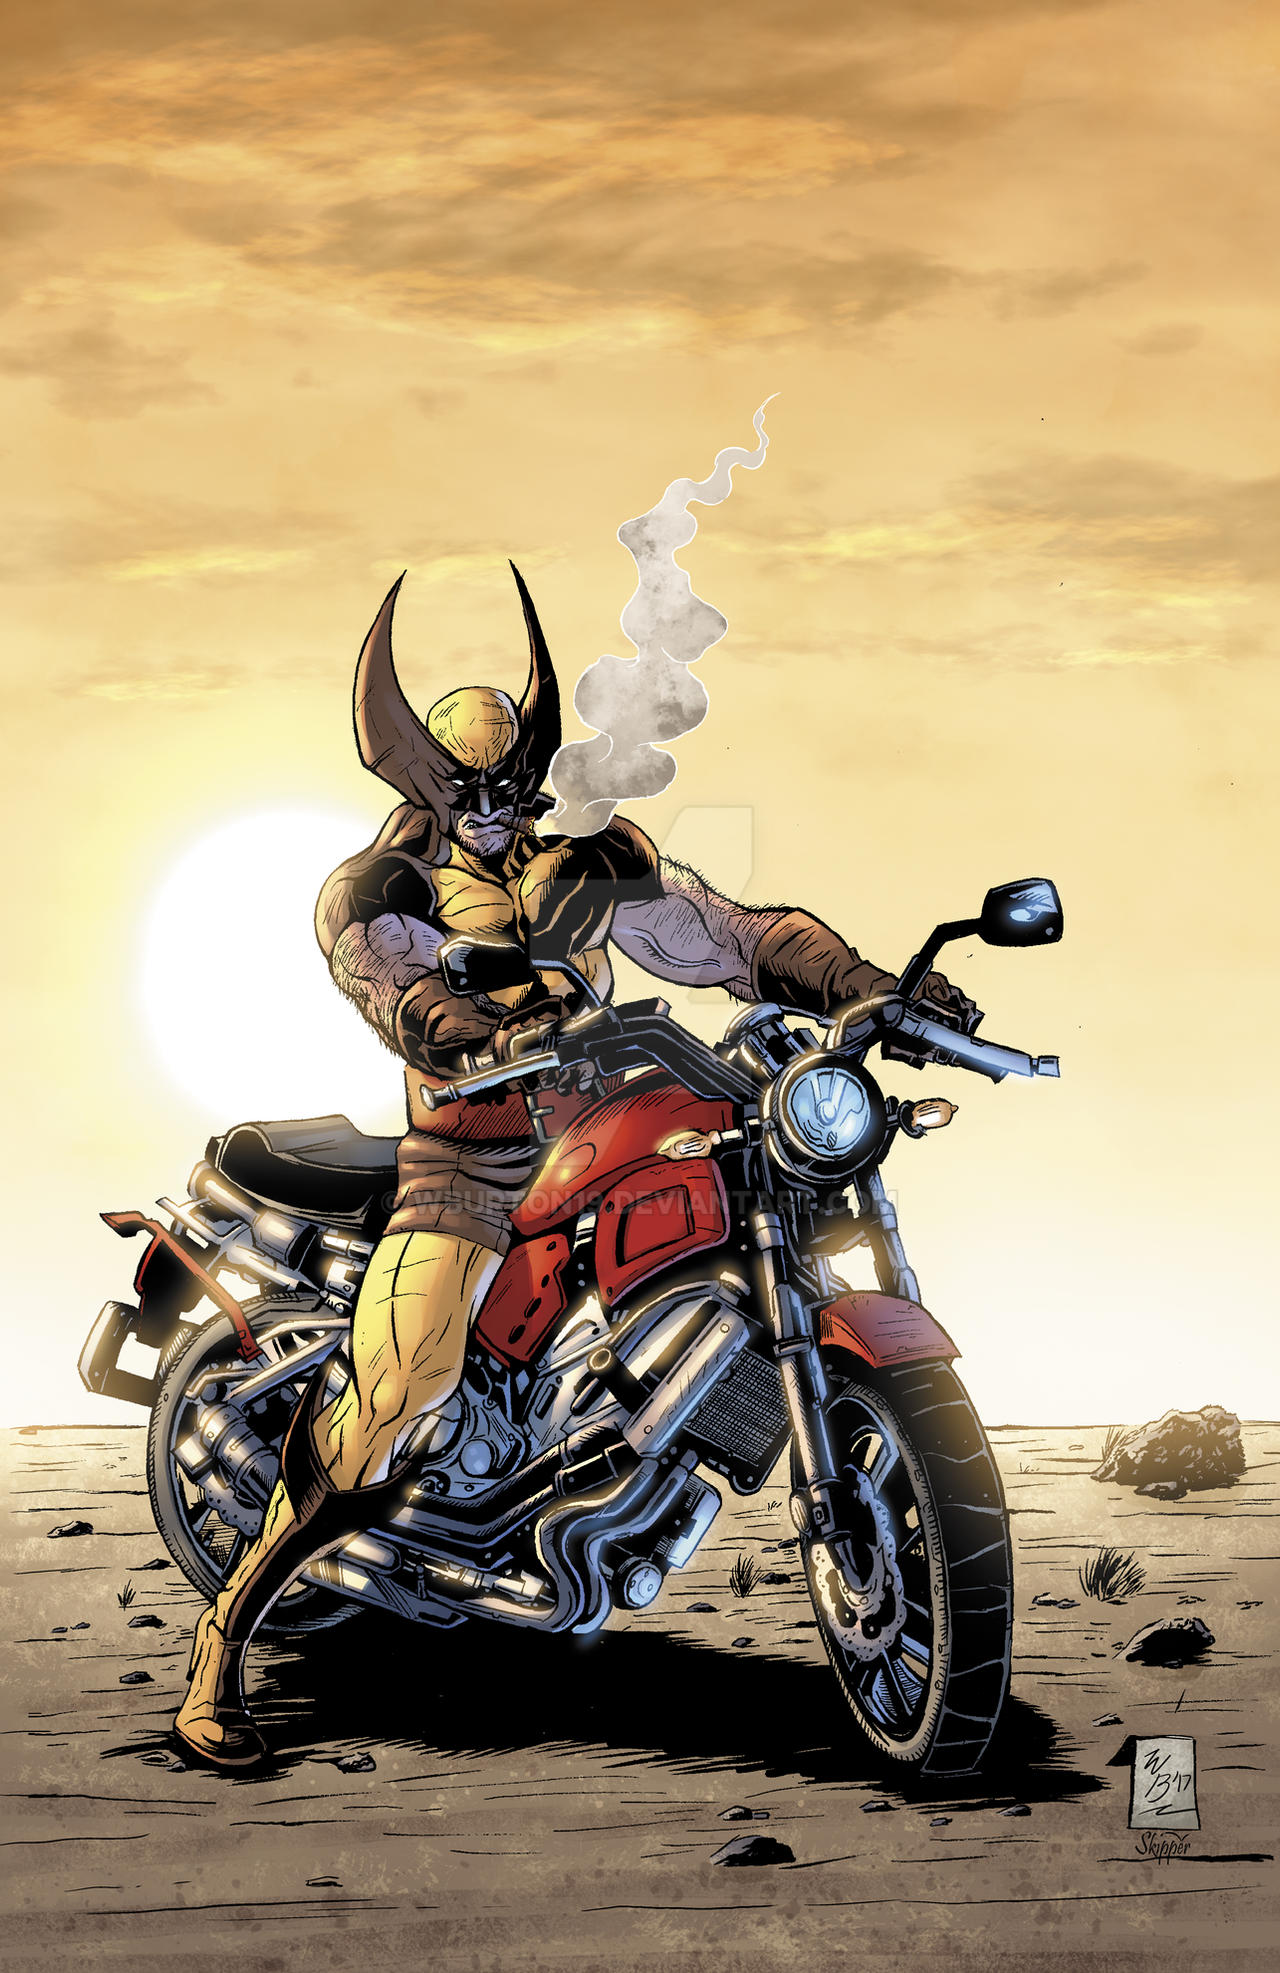 Esboco Wolverine motoqueiro by Pazotto on DeviantArt